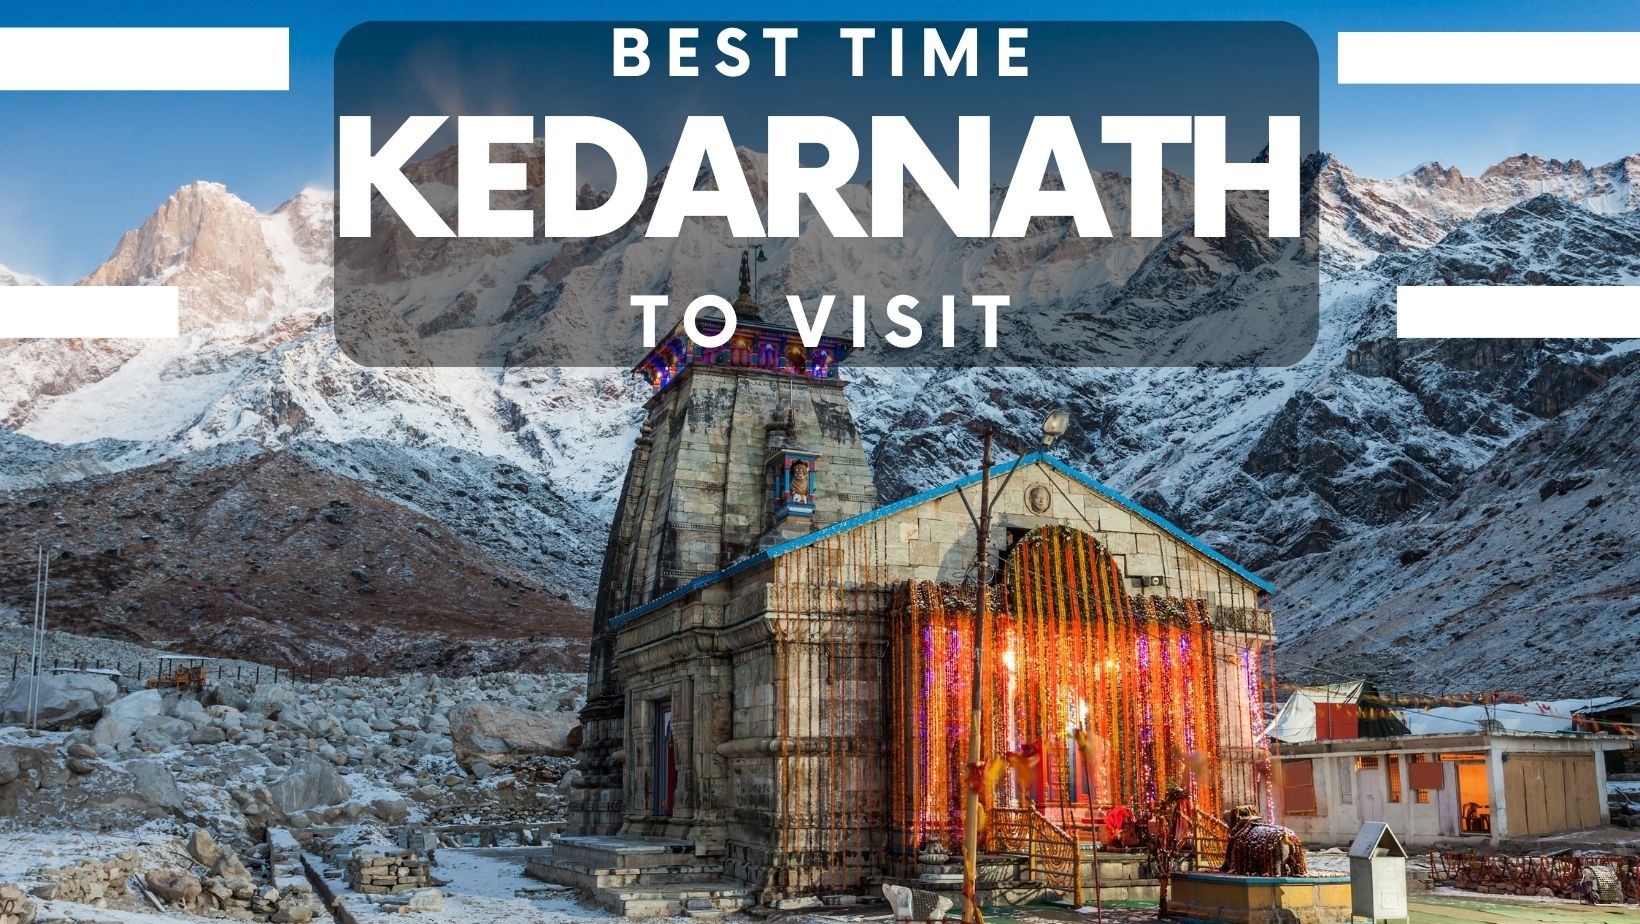 Best time to visit in kedarnath